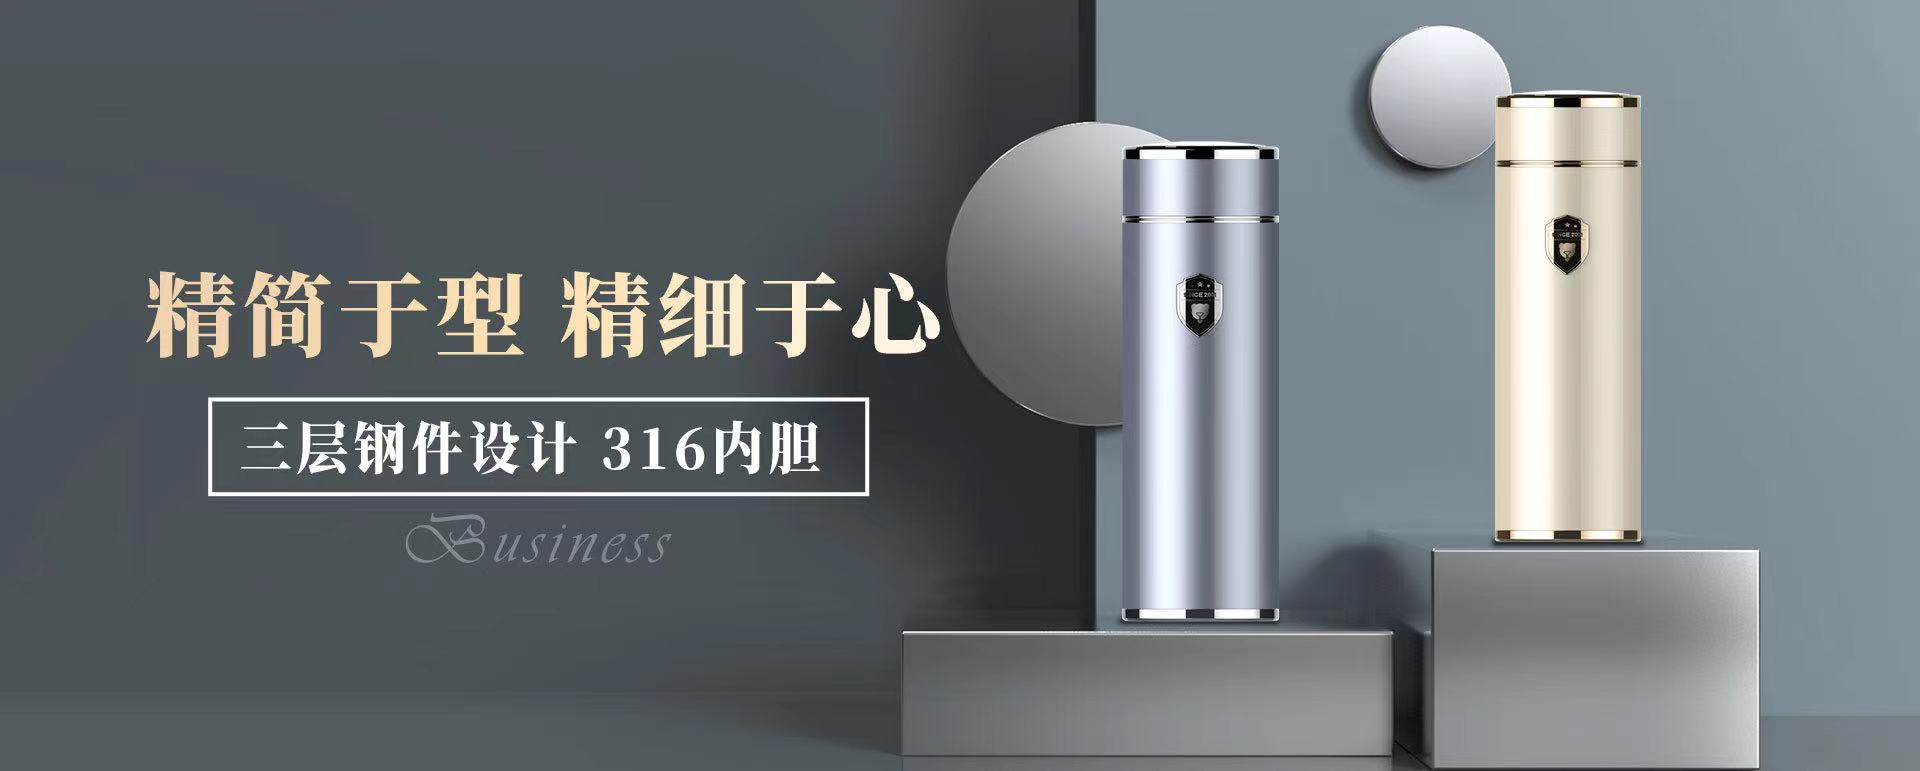 浙江匡迪工贸有限公司-Zhejiang kuangdi,kuangdi industry and trade - zhejiang kuangdi industry and trade - focus on the thermos cup, thermos kettle, glass research and manufacture of large-scale enterprises